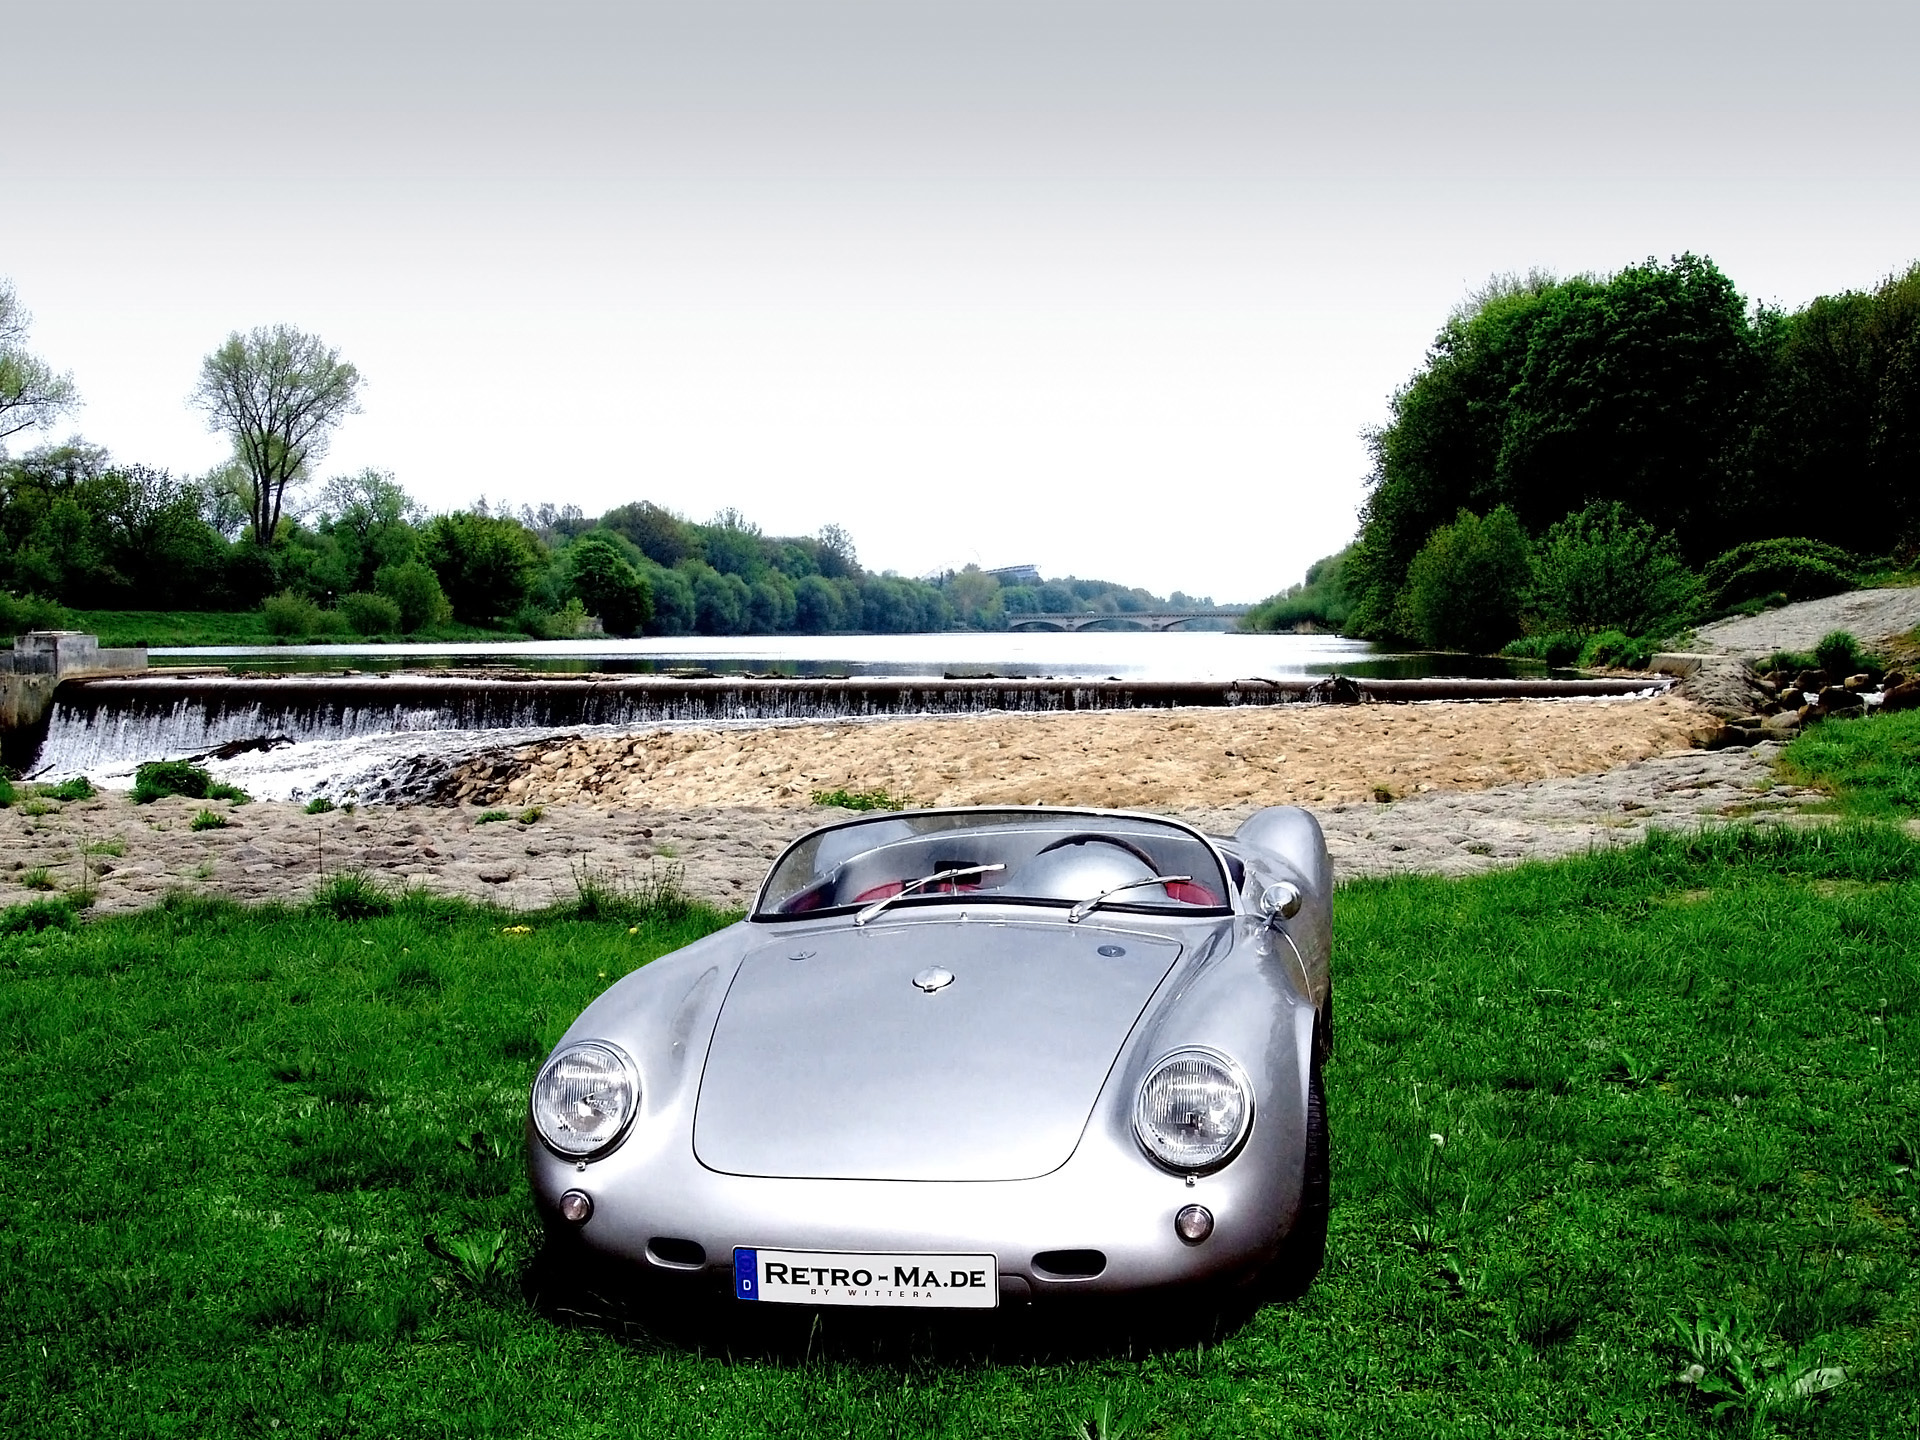 2011, Wittera, Retro ma, De, Spyder, Porsche, Supercar, 550 Wallpaper